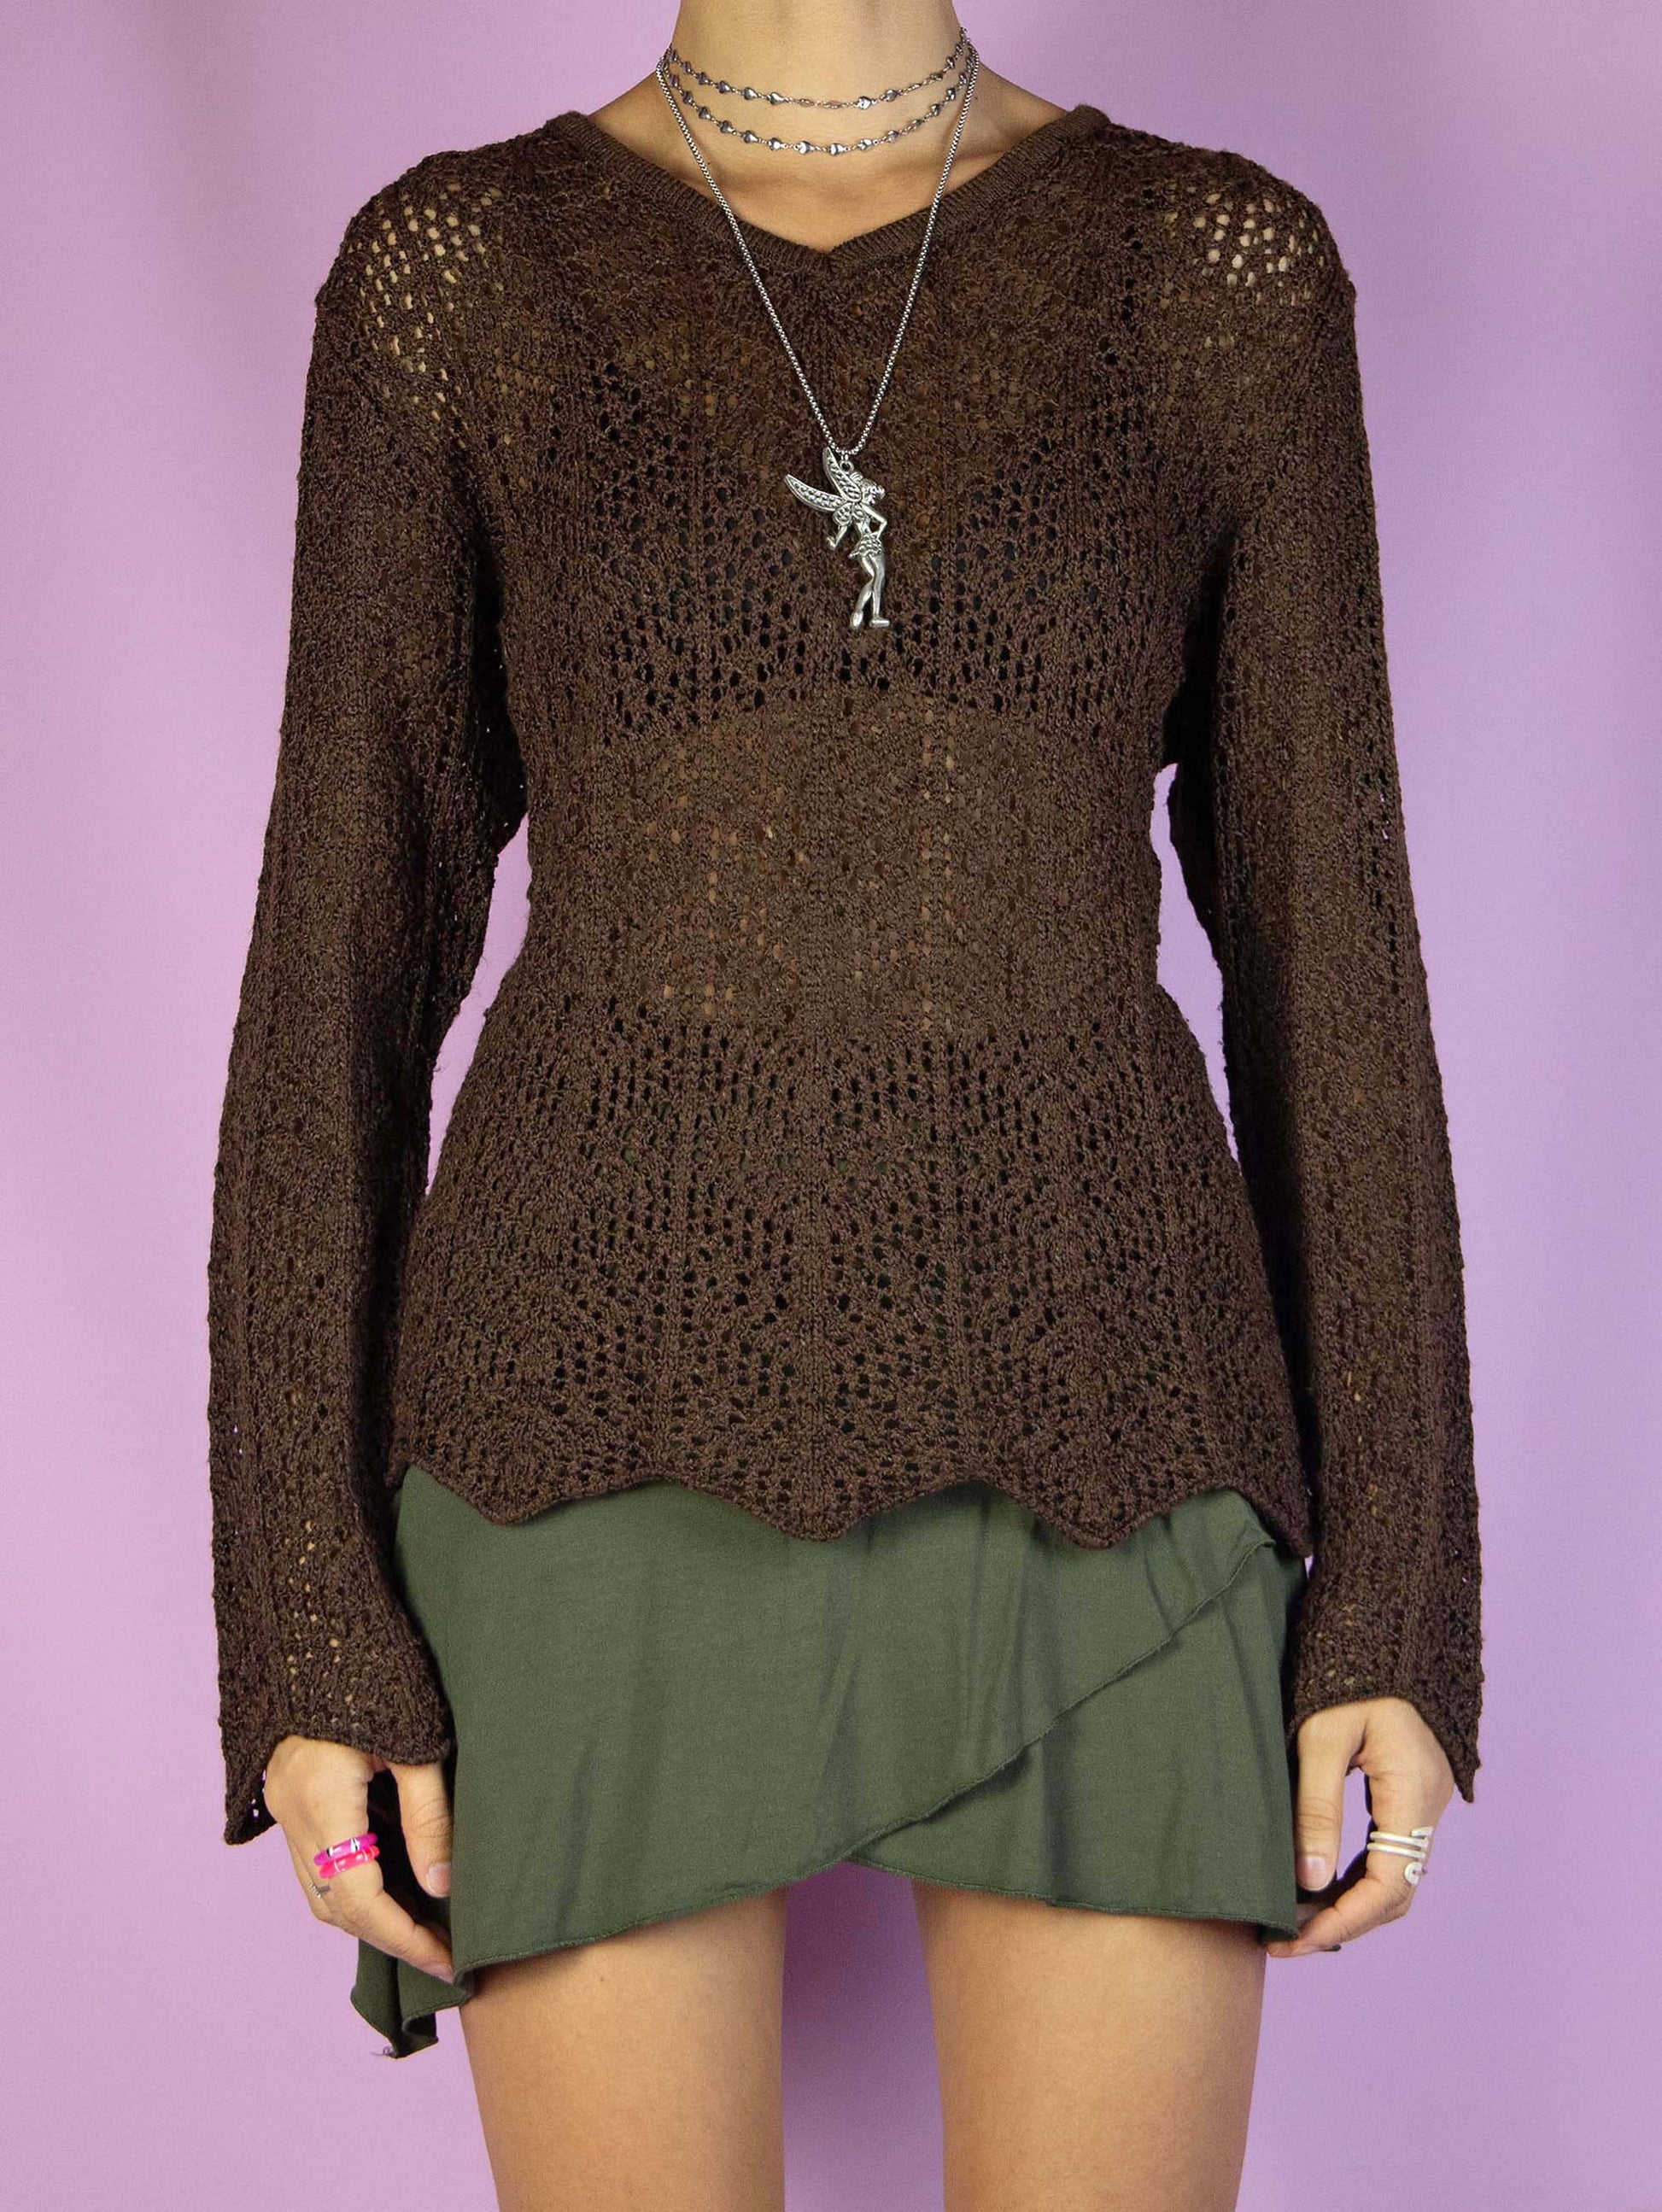 The Y2K Dark Brown Crochet Top is a vintage long-sleeve dark brown crochet knit top with a v-neck. Super cute boho fairy grunge 2000s sweater.